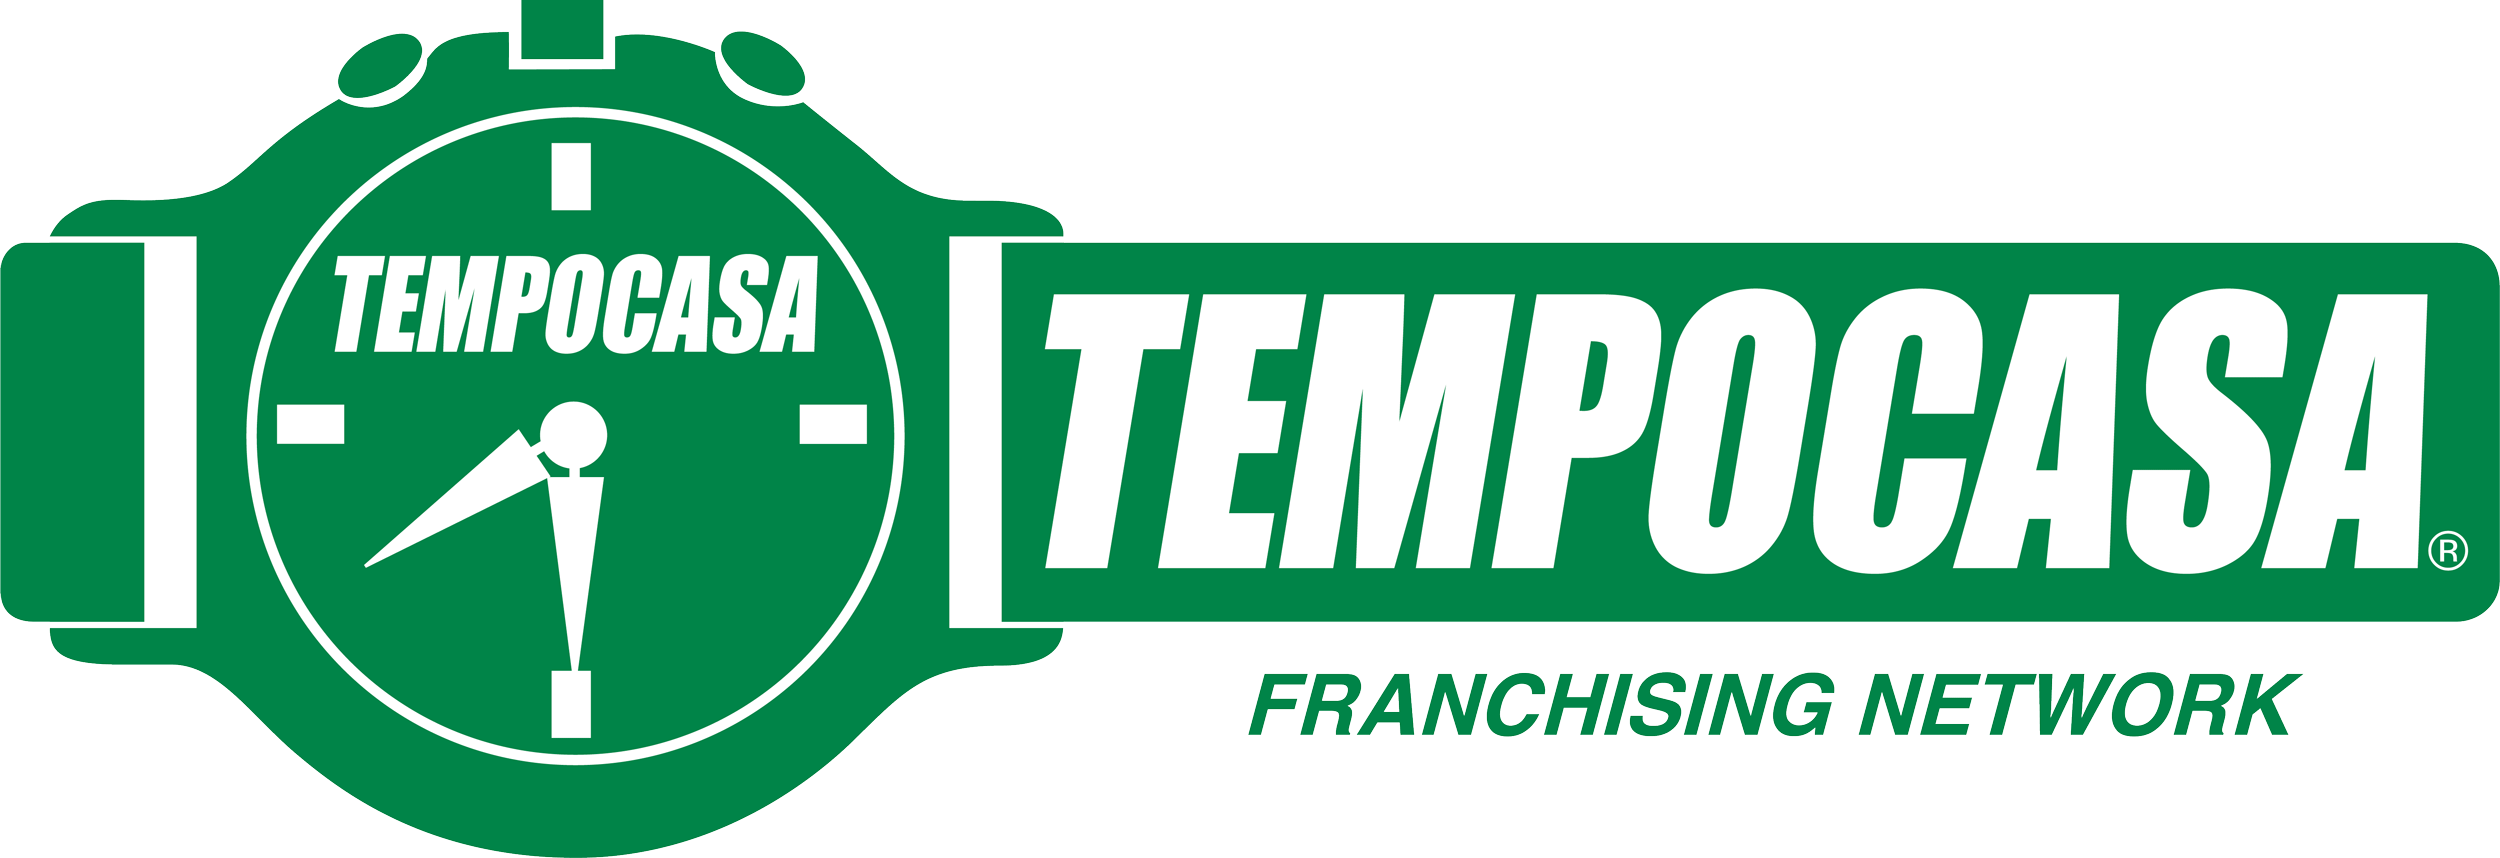 Torino - Cenisia - Tempocasa